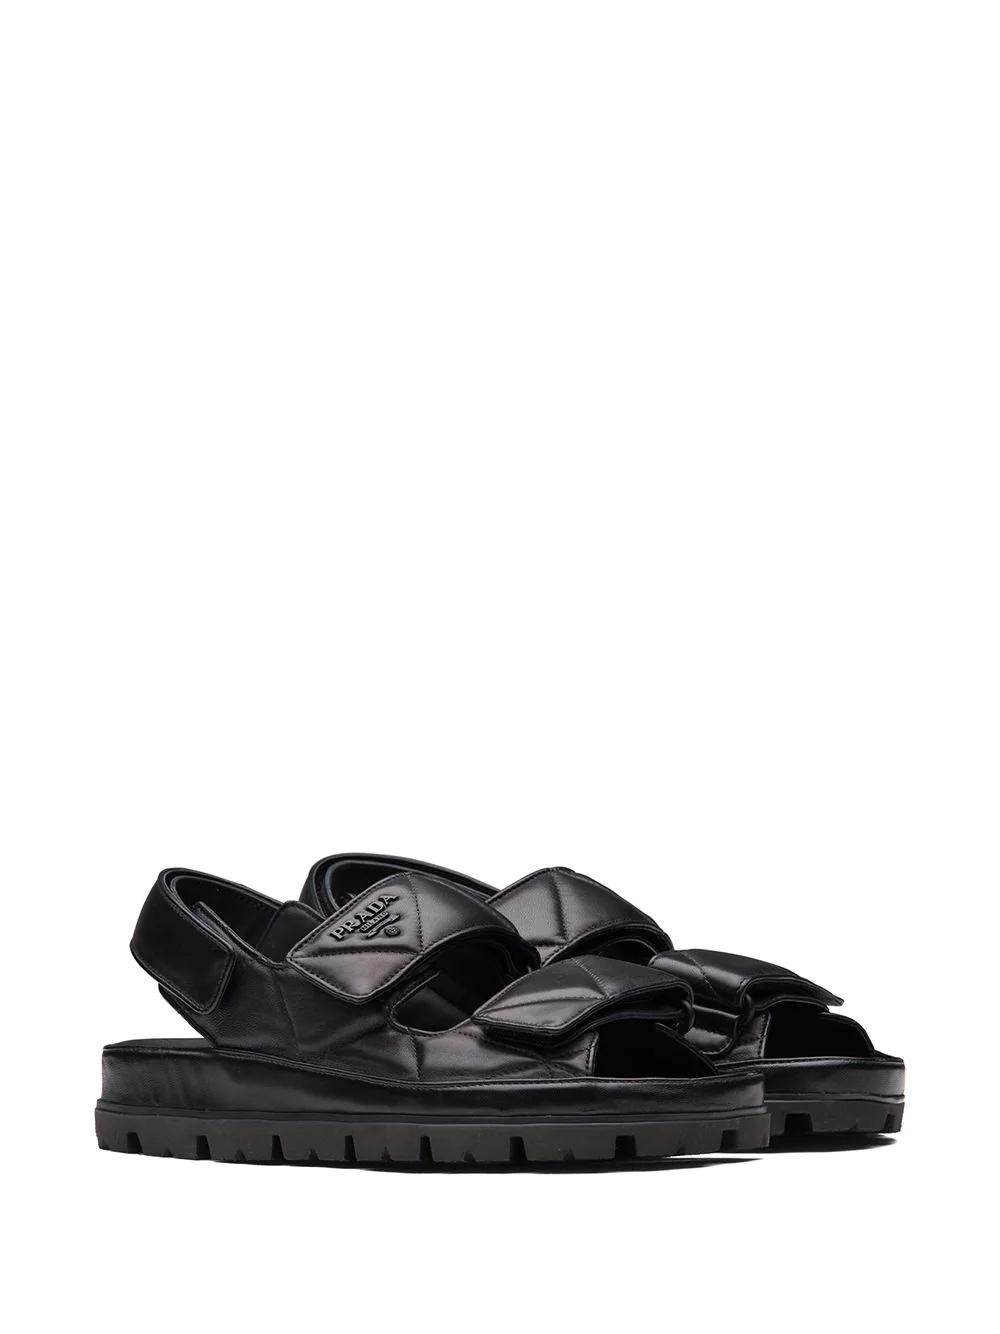 Prada Logo-strap Chunky Sandals in Black | Lyst